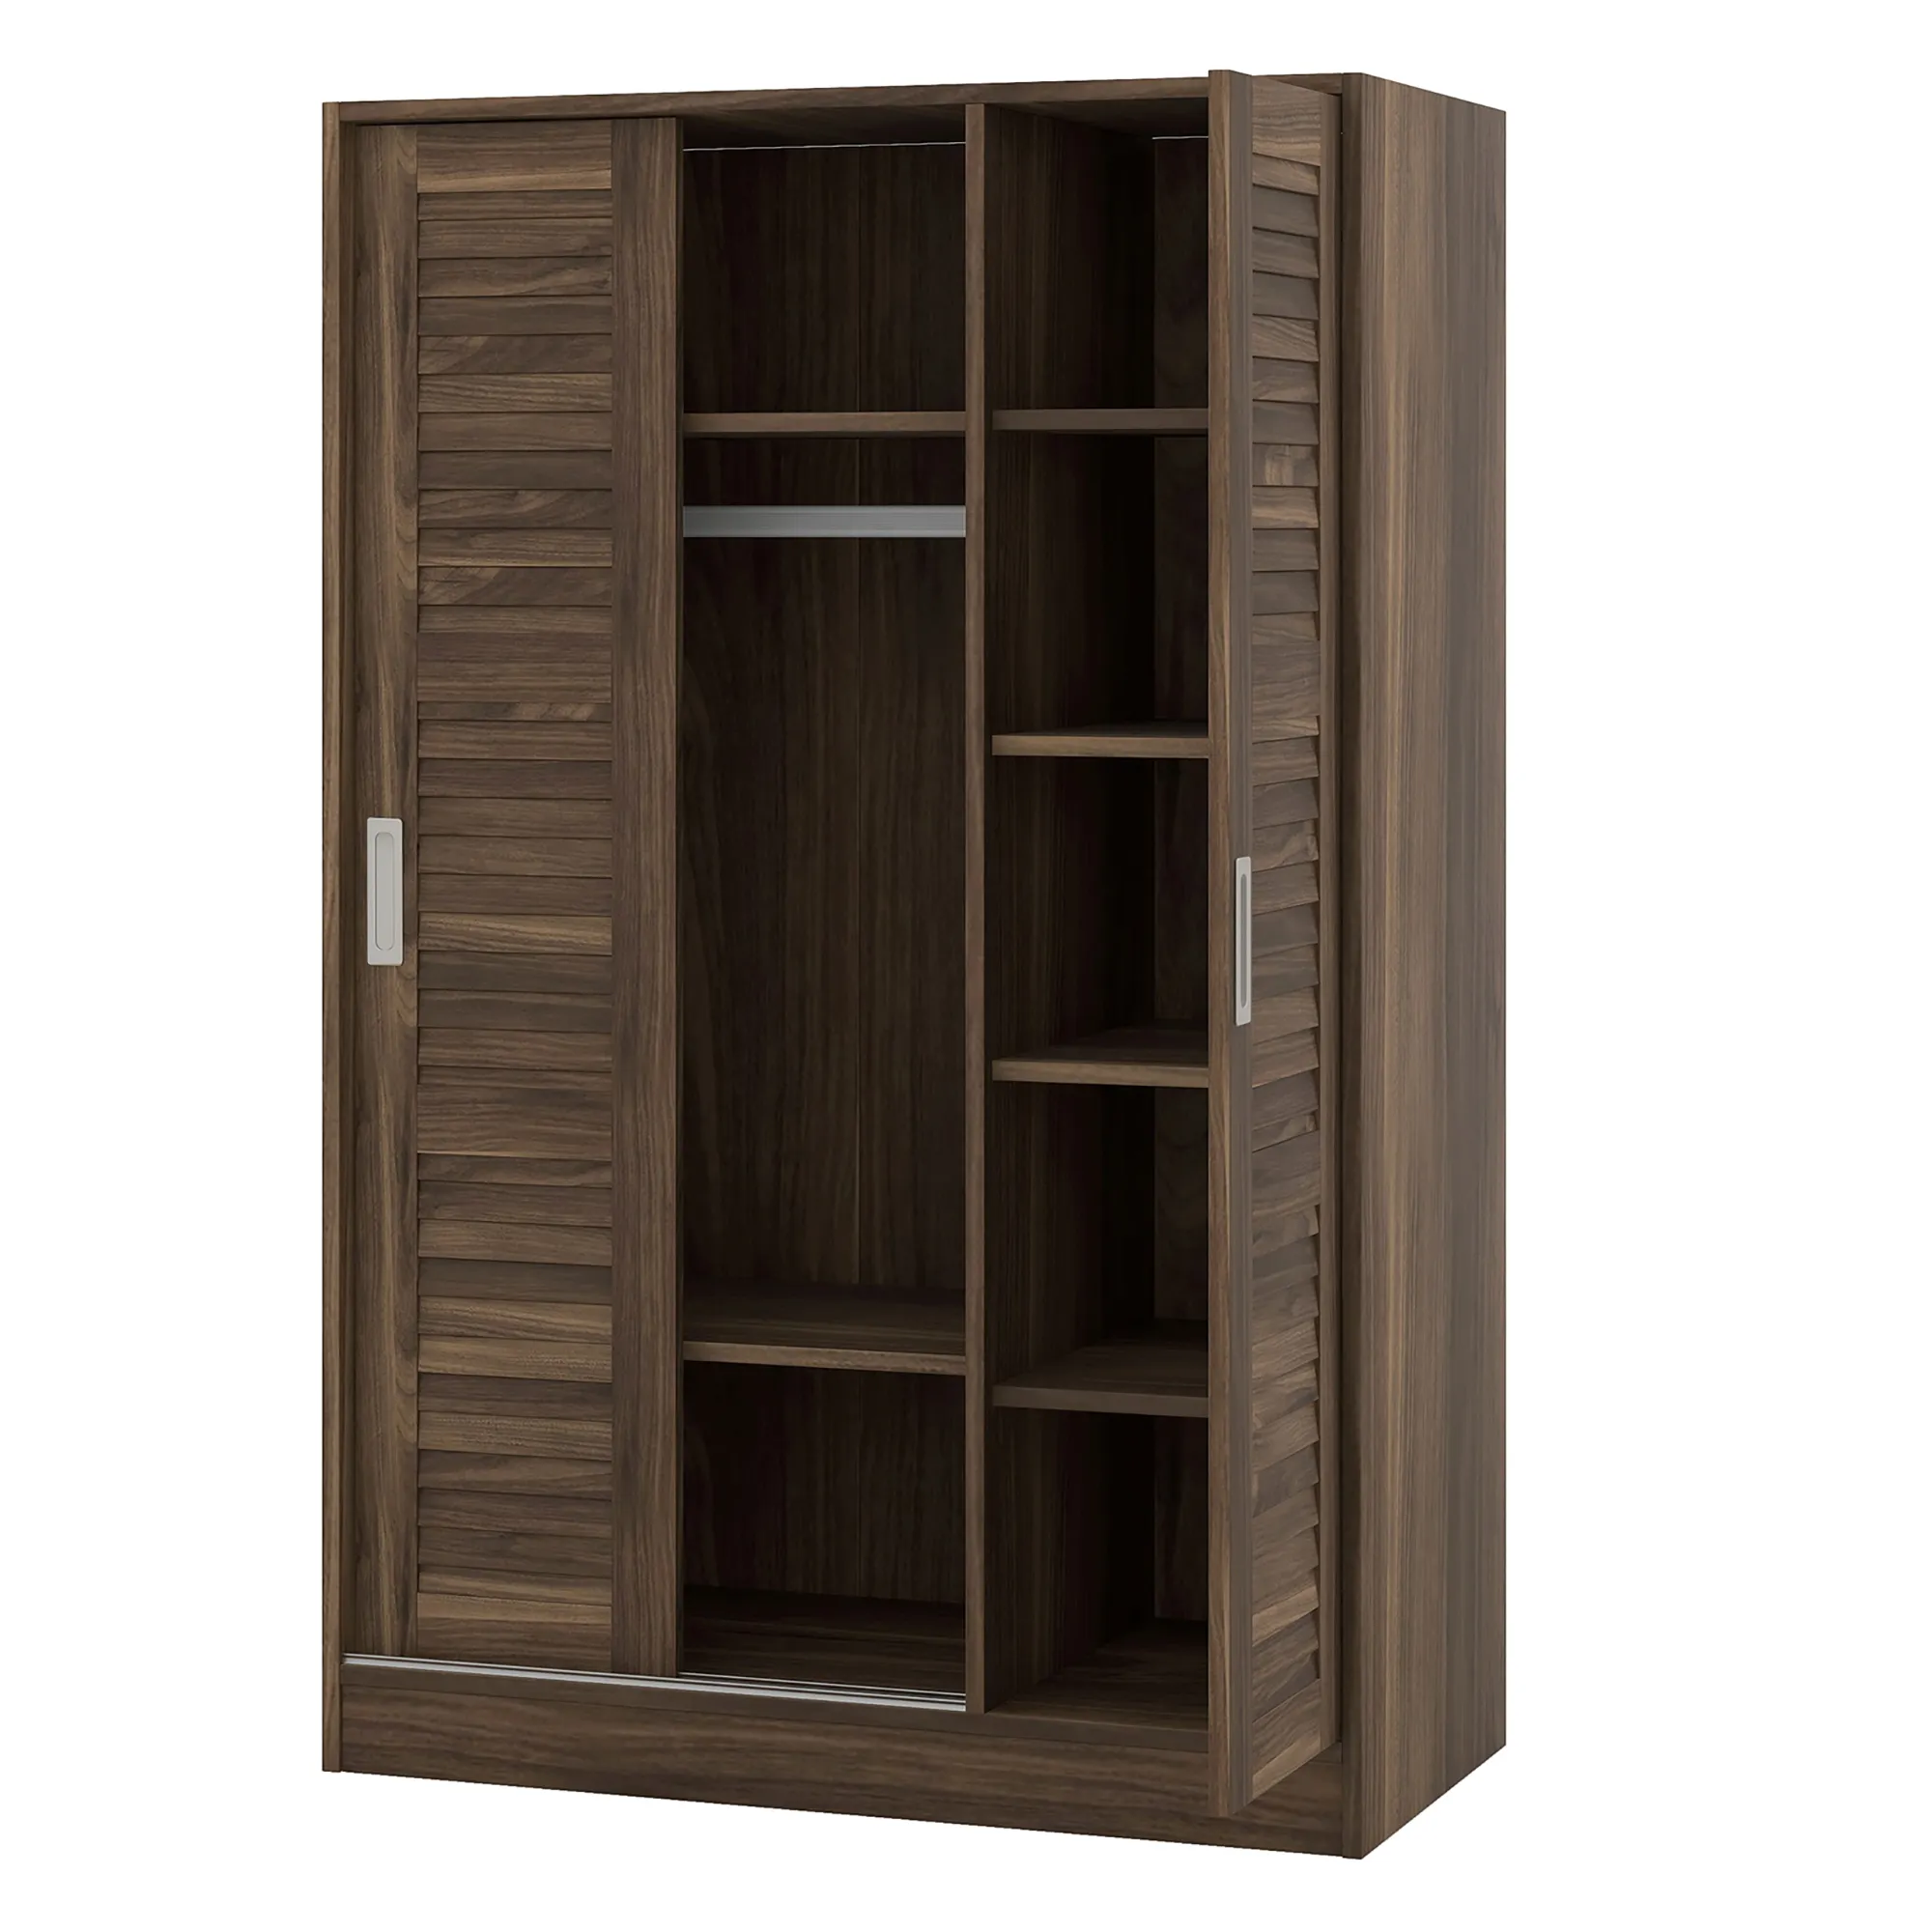 Merax Modern 3-Door Shutter Wardrobe with Shelves